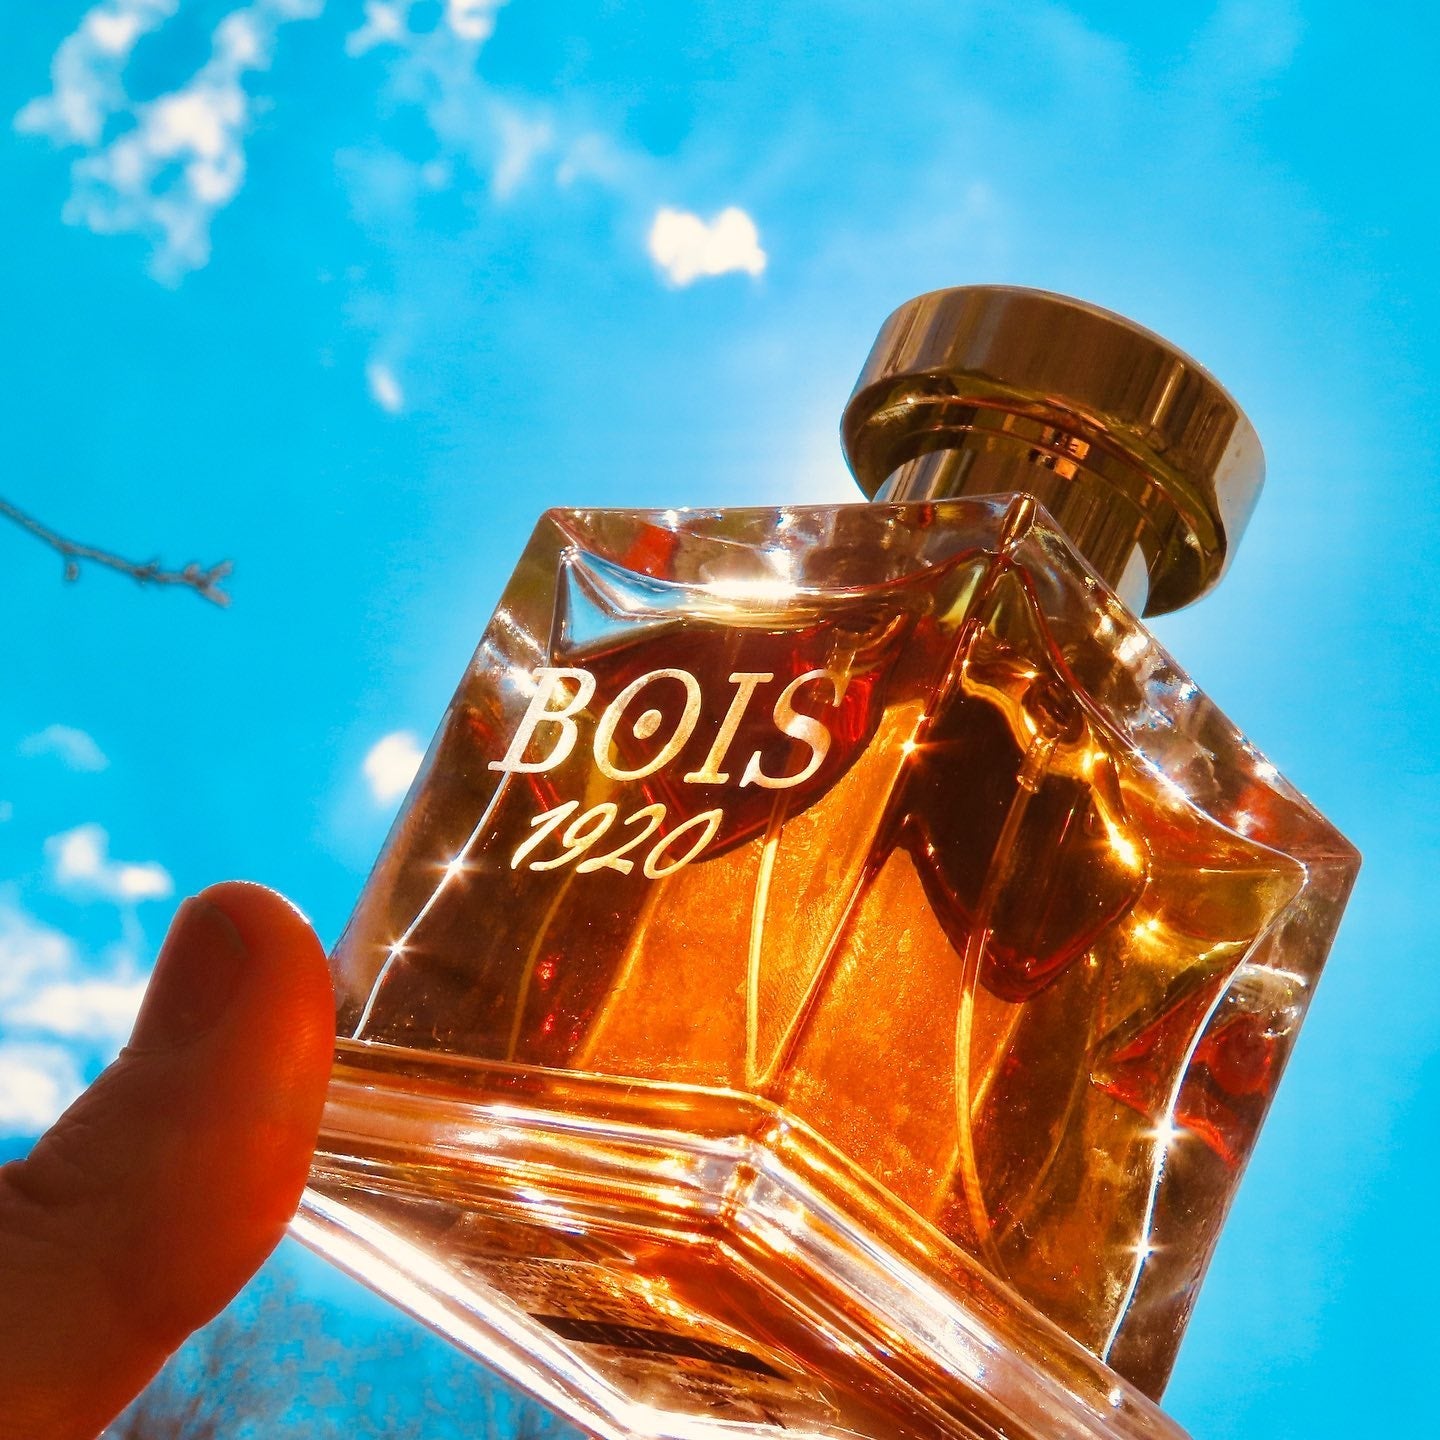 Bois 1920 Elite Iii | My Perfume Shop Australia